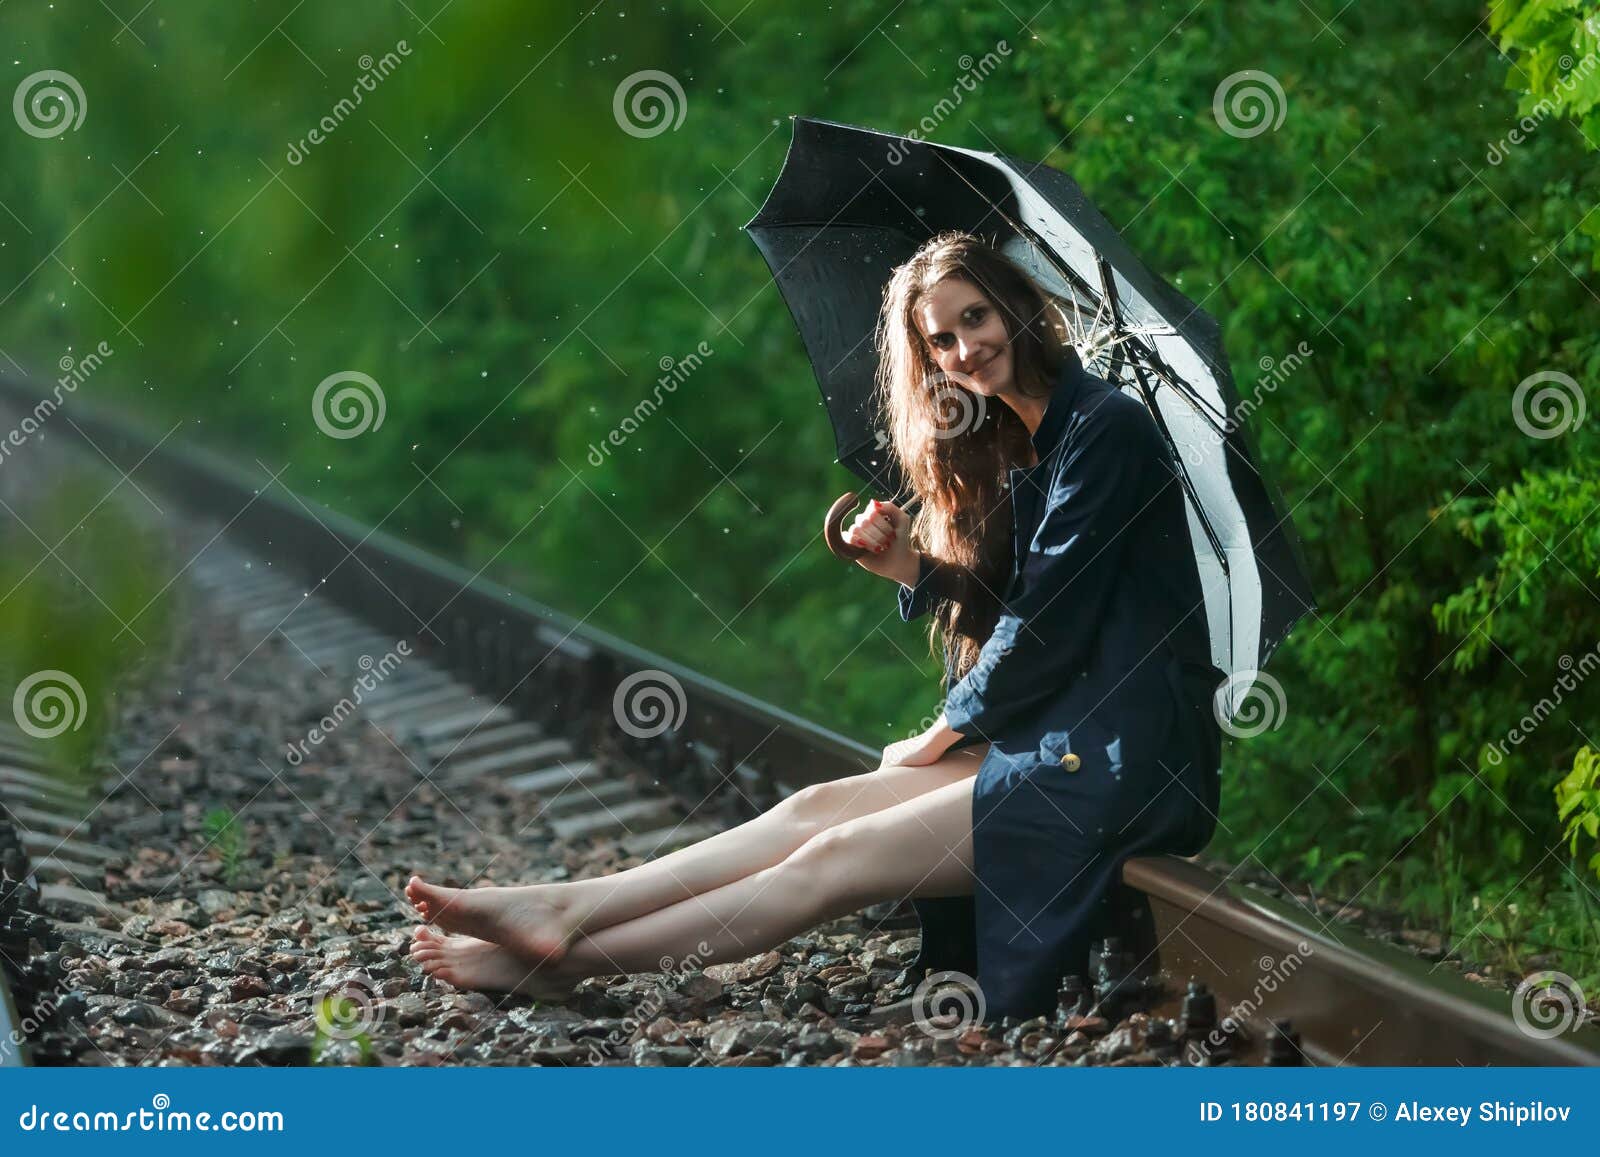 https://thumbs.dreamstime.com/z/girl-black-umbrella-railway-tracks-forest-its-raining-sitting-rails-her-hair-loose-smile-face-look-camera-180841197.jpg